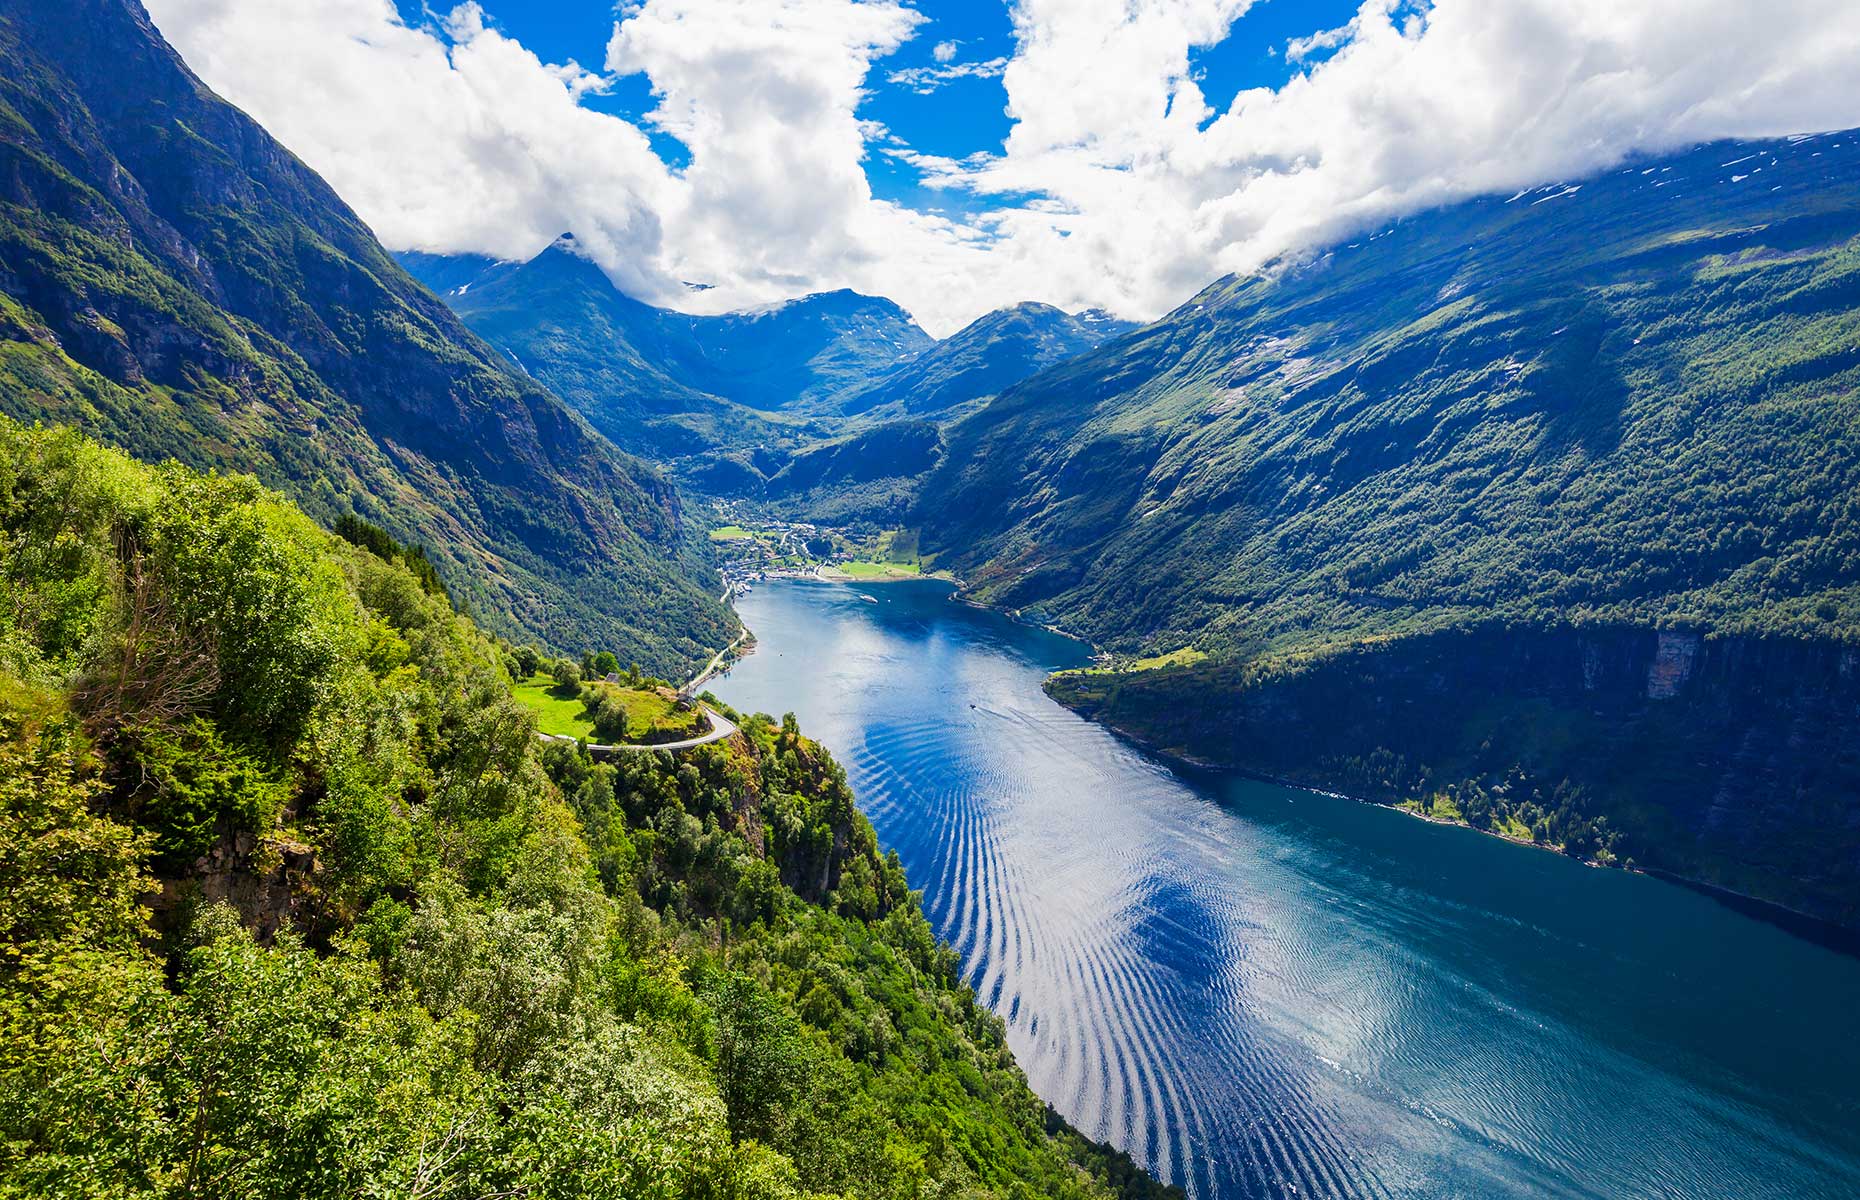 Geirangerfjord, Norway (Image: saiko3p/Shutterstock)